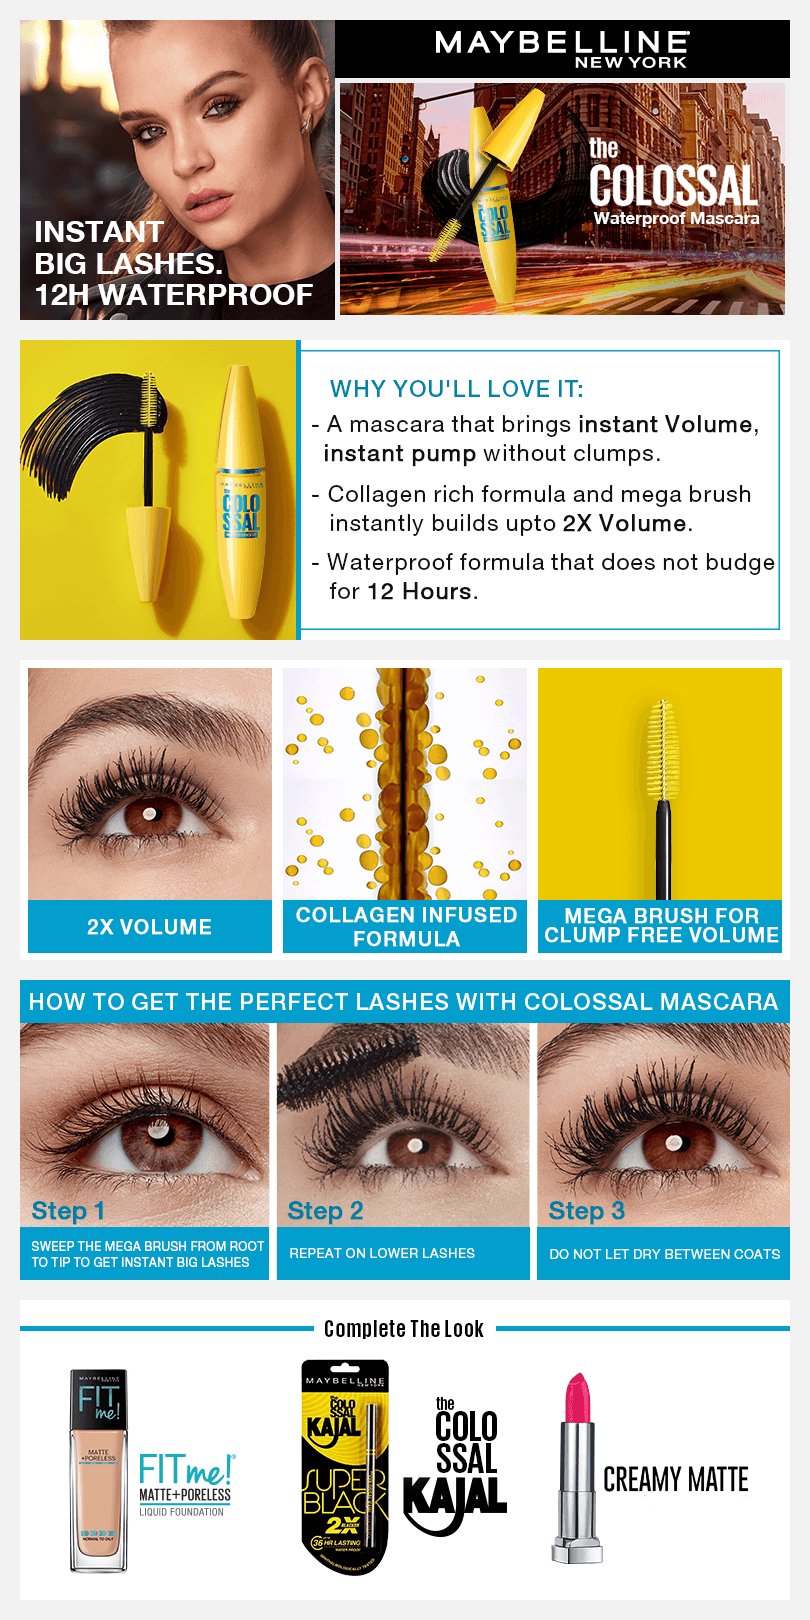 Waterproof mascara for larger-looking eyes